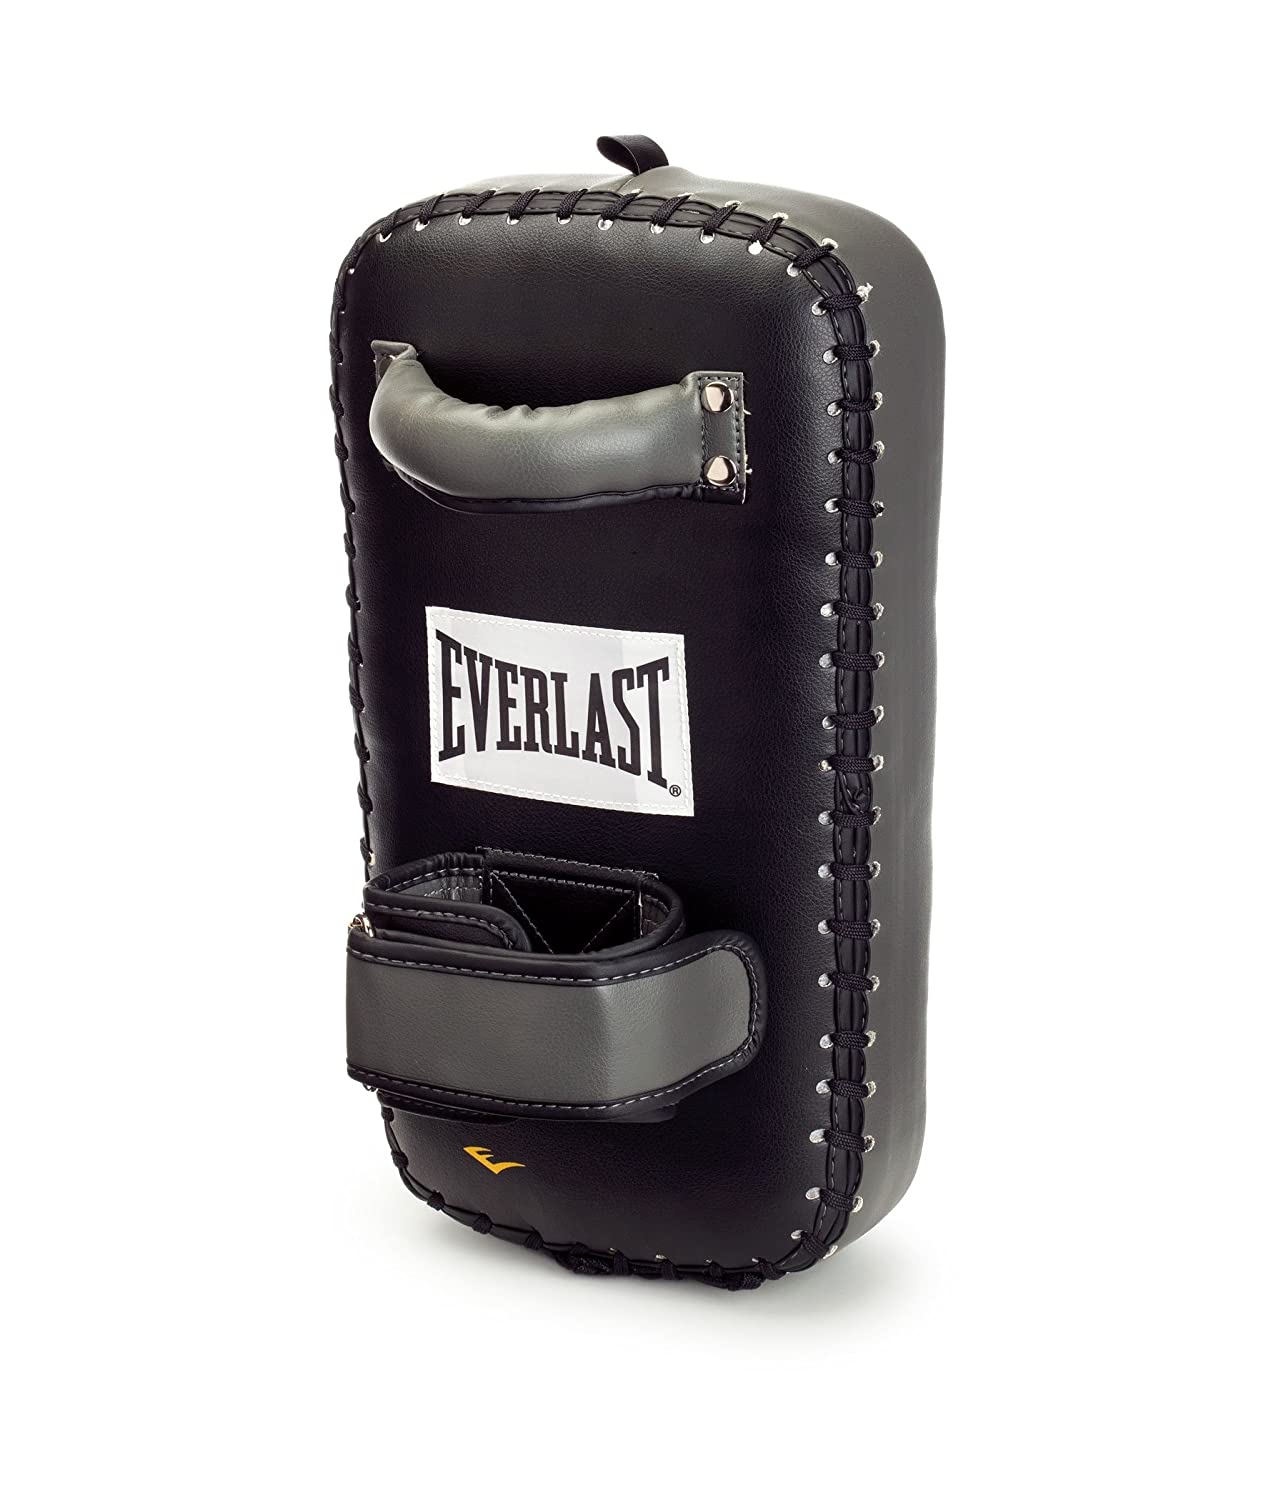 Everlast 7517 Boxing Pads (Black) - Best Price online Prokicksports.com